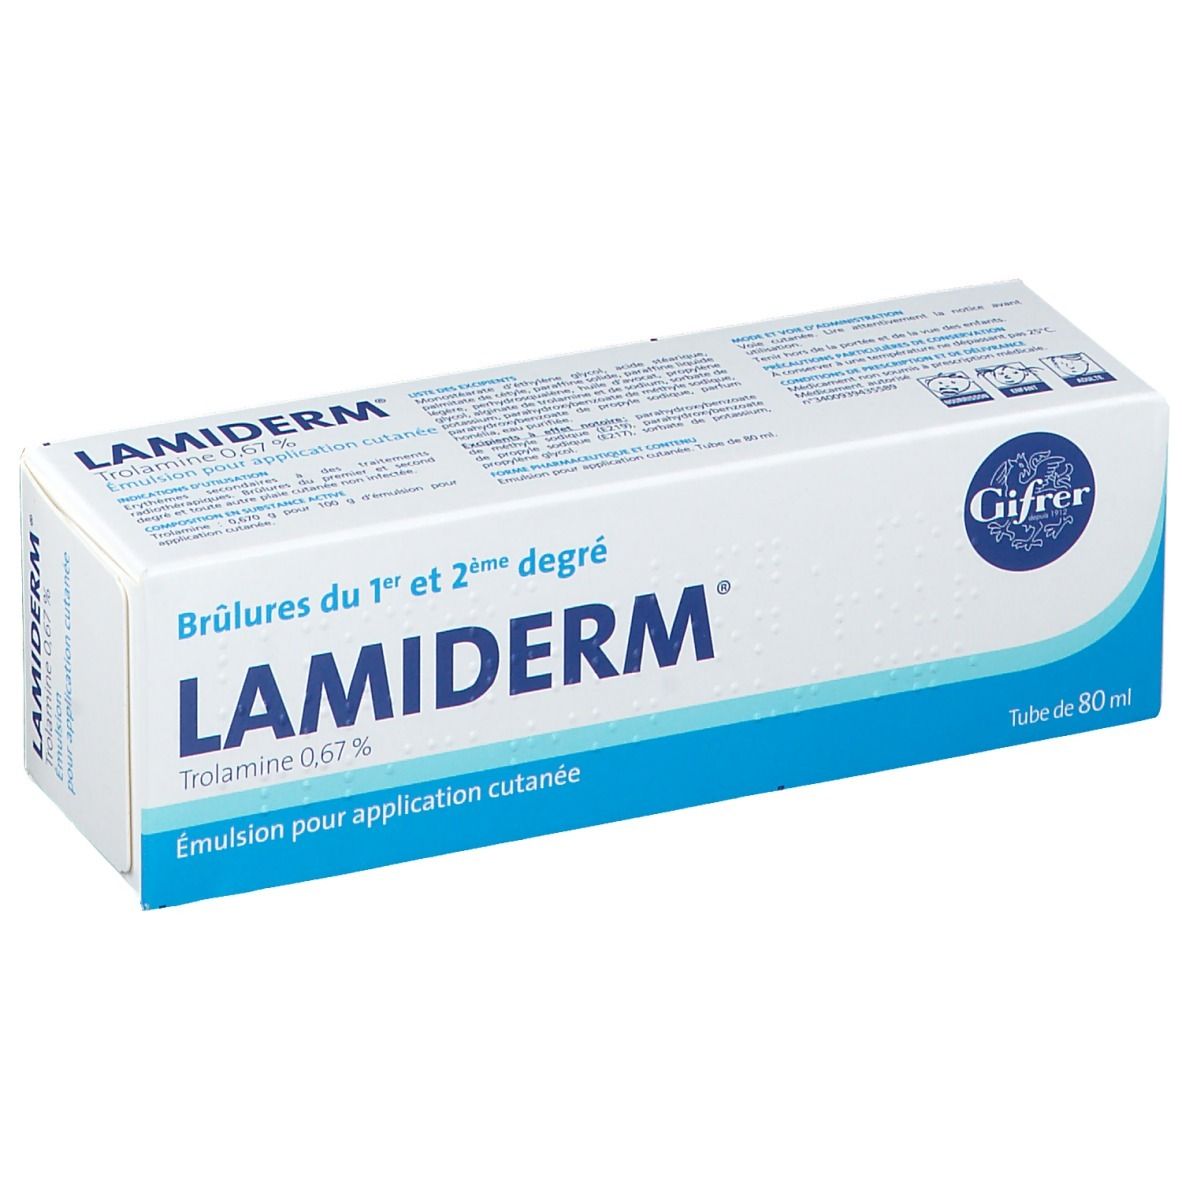 Lamiderm® 0,67%